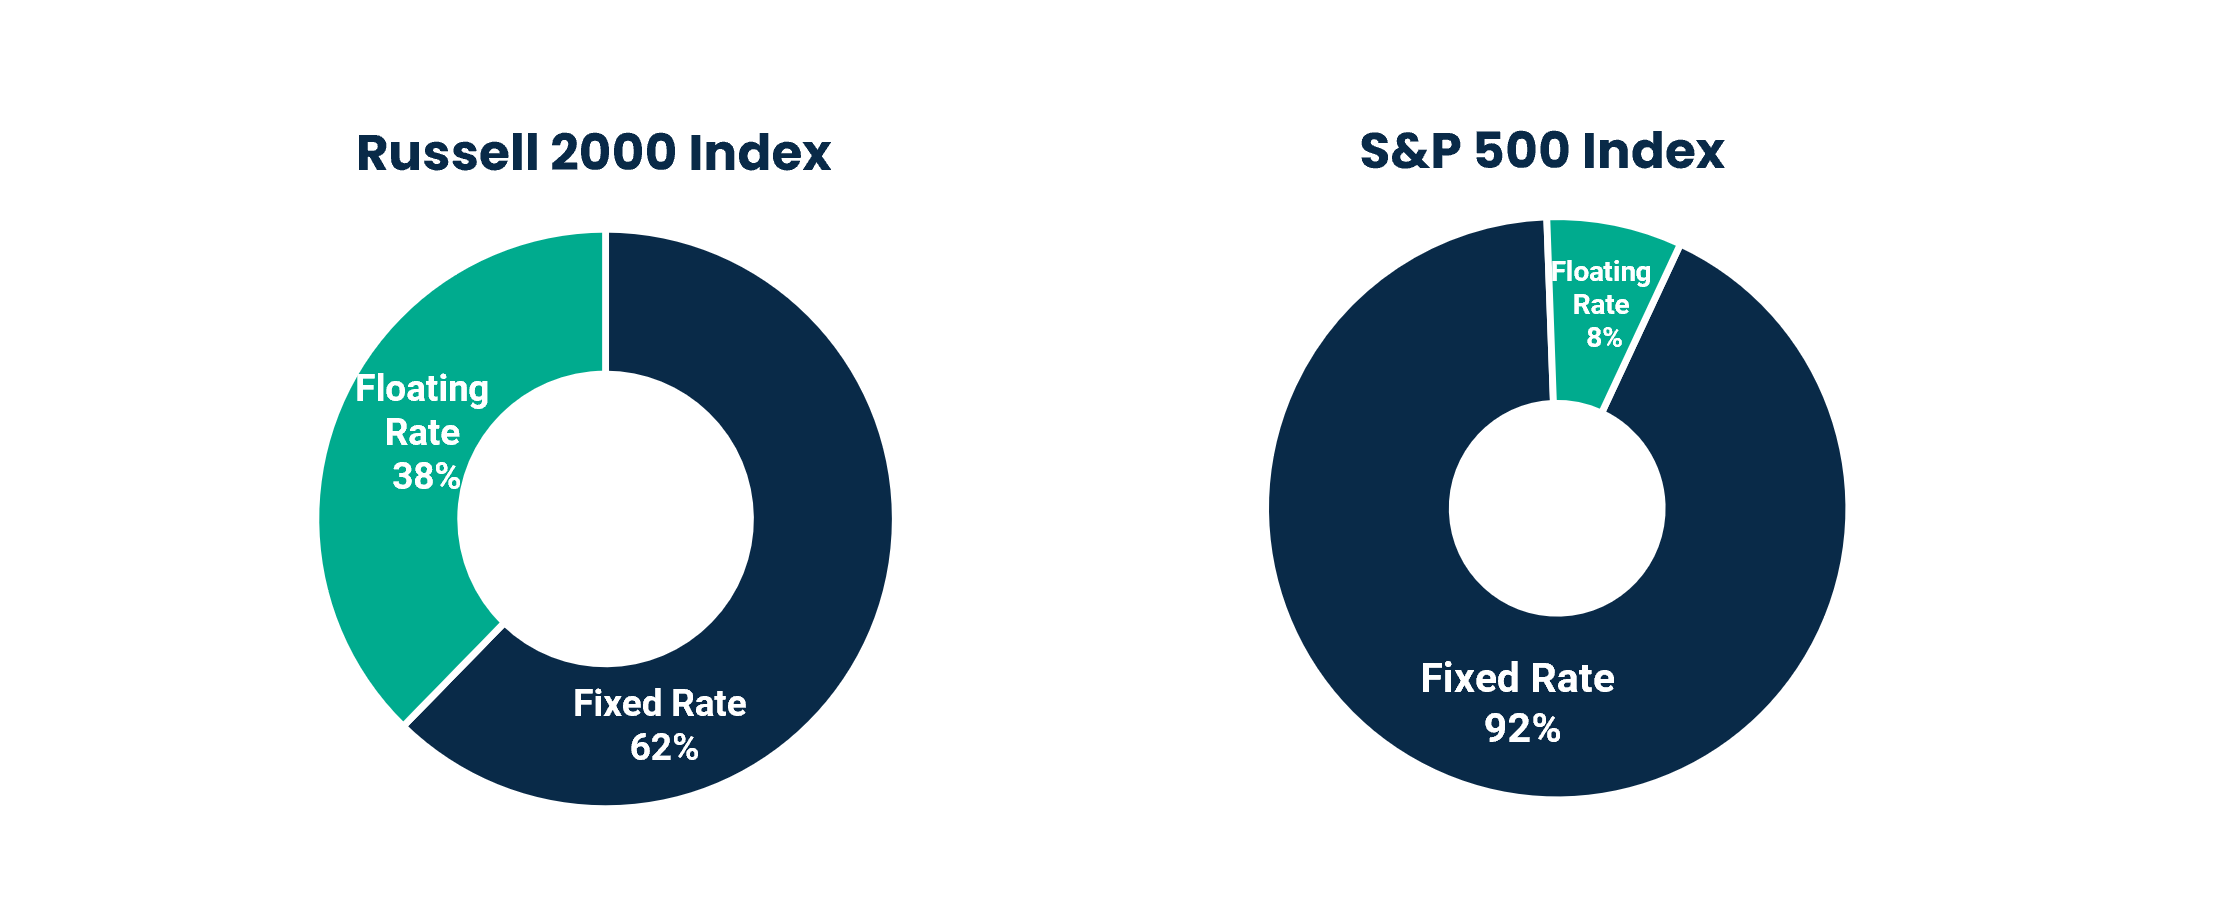 Russell 2000 Index & S&P 500 Index